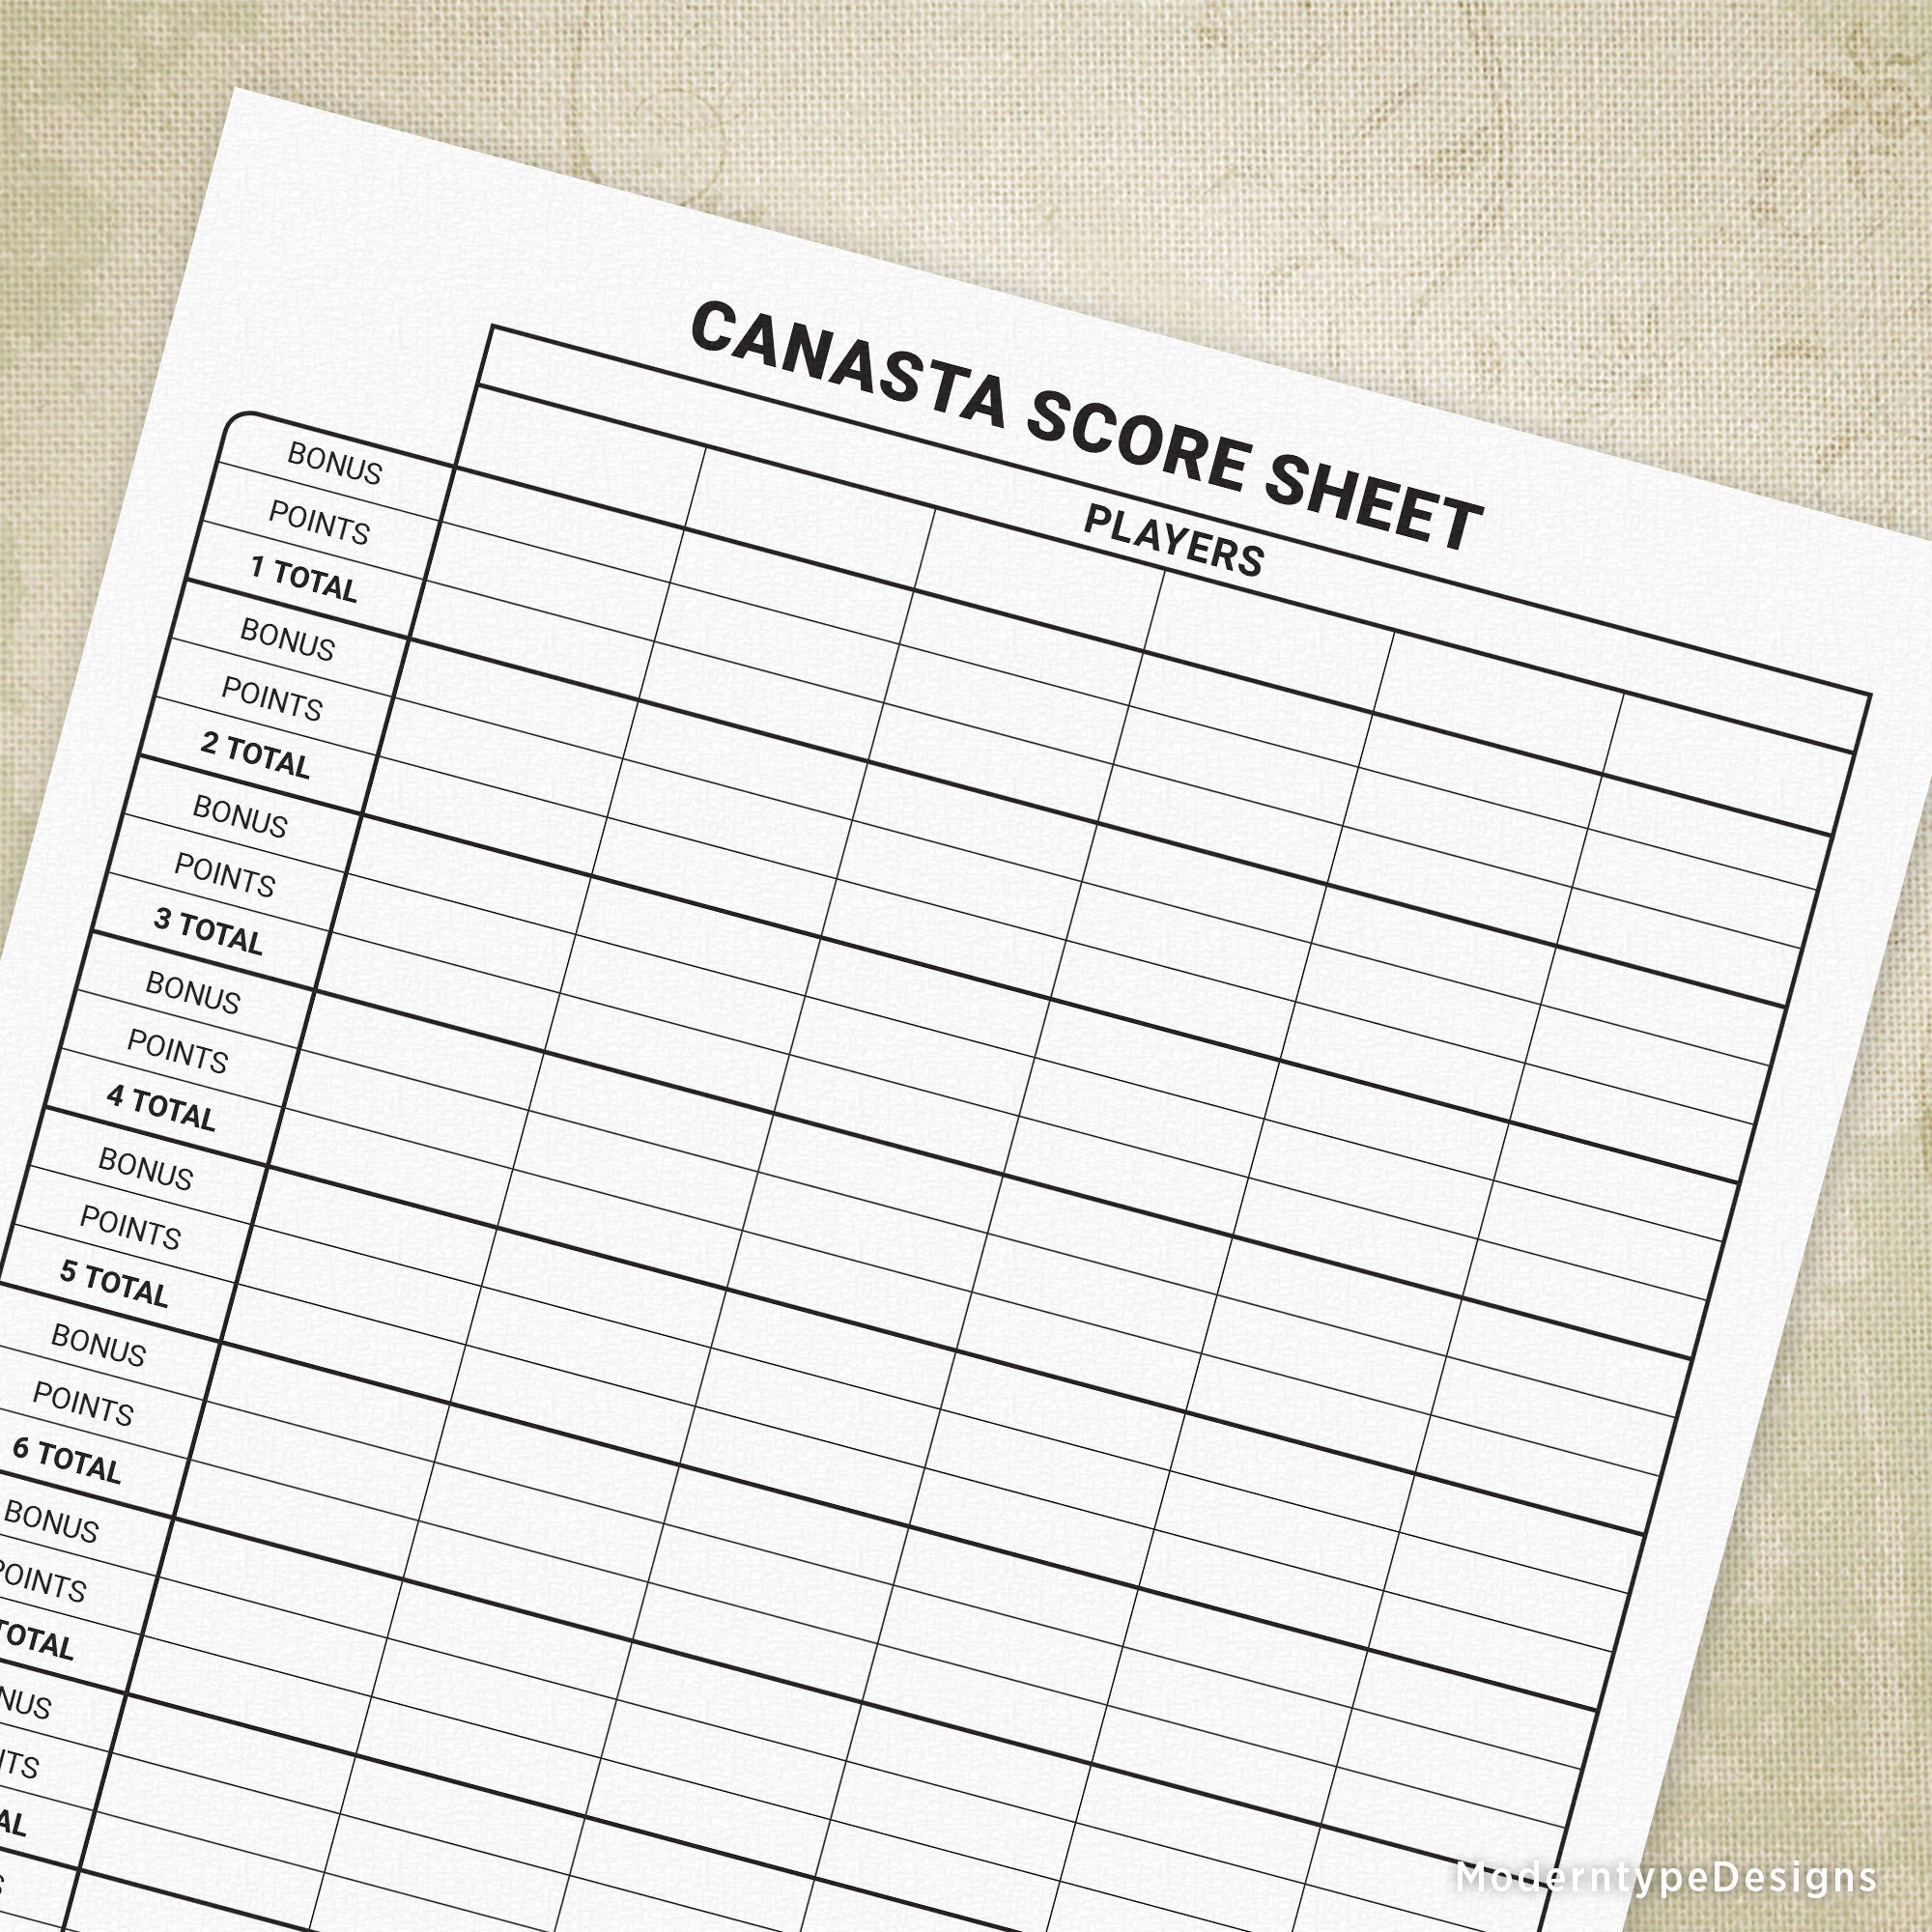 Canasta Score Sheet Printable Form